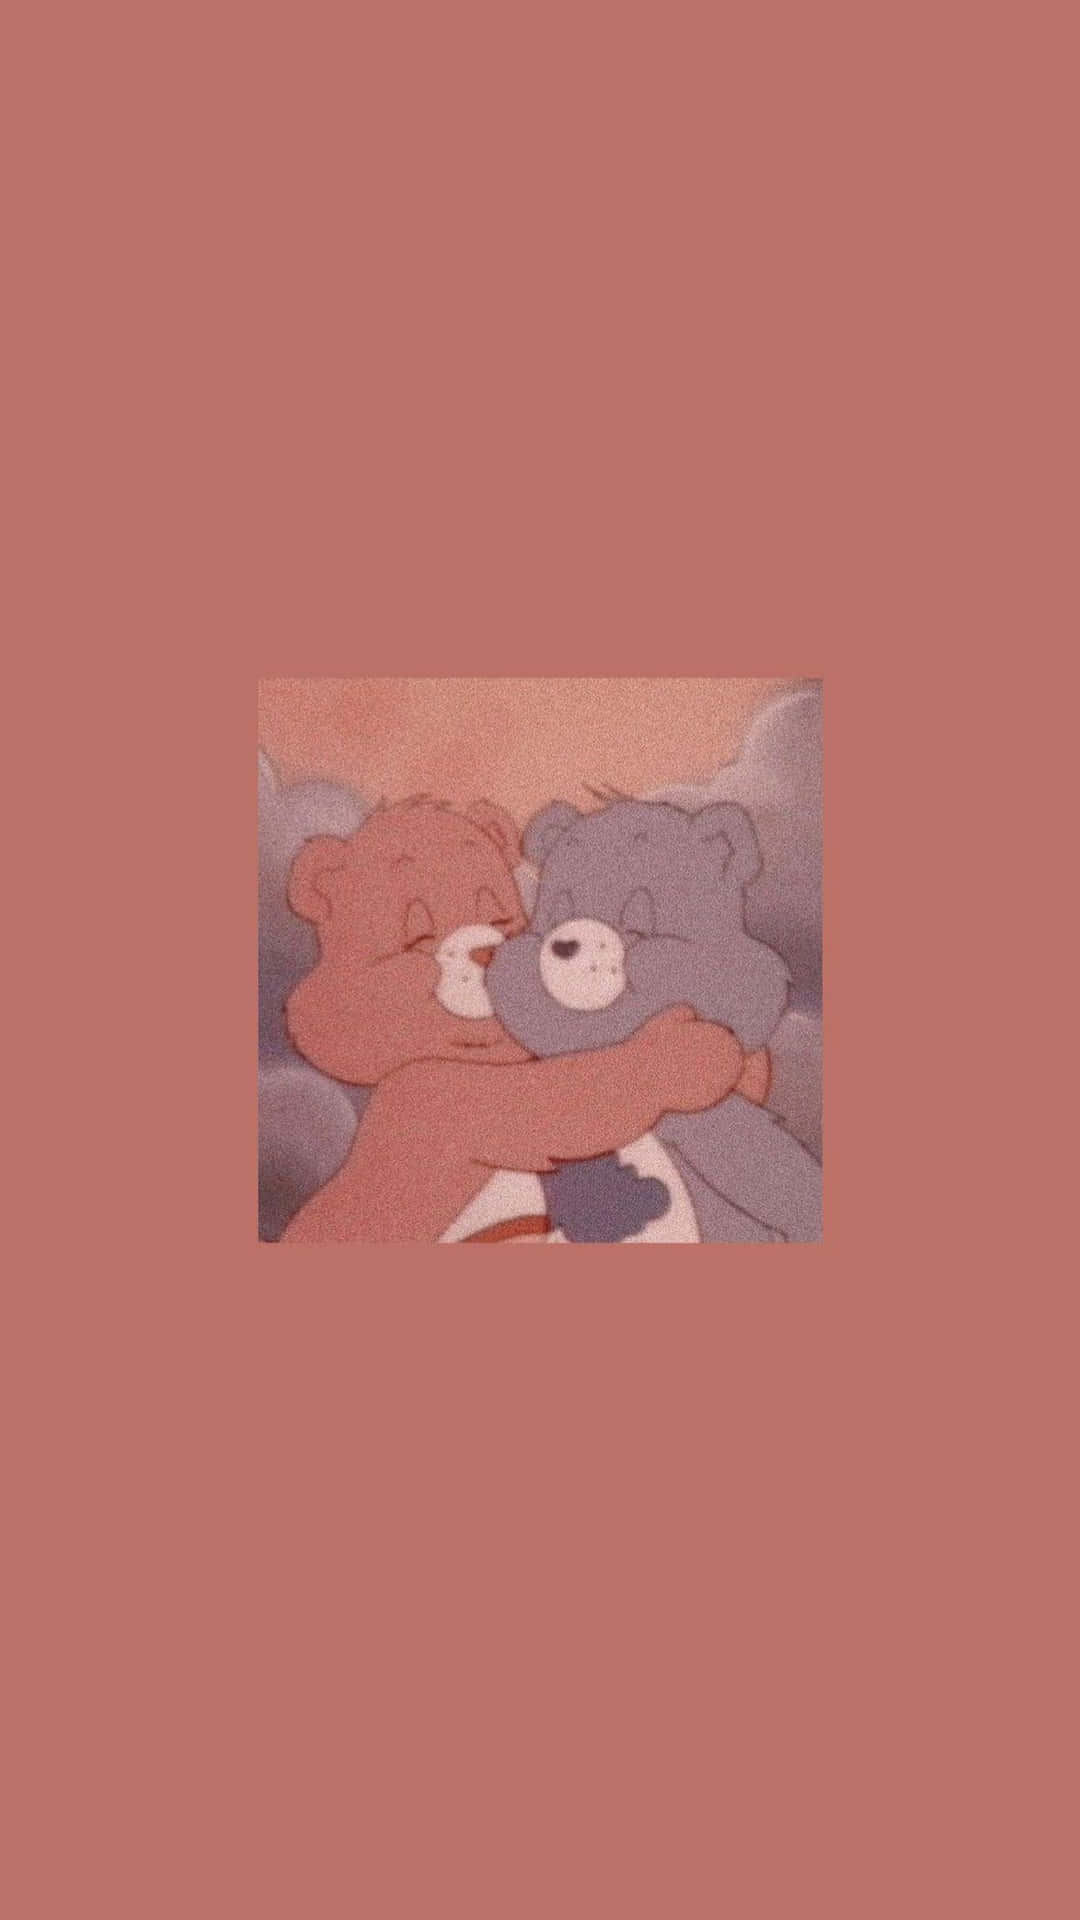 Cuddling Cartoon Bears Aesthetic Wallpaper